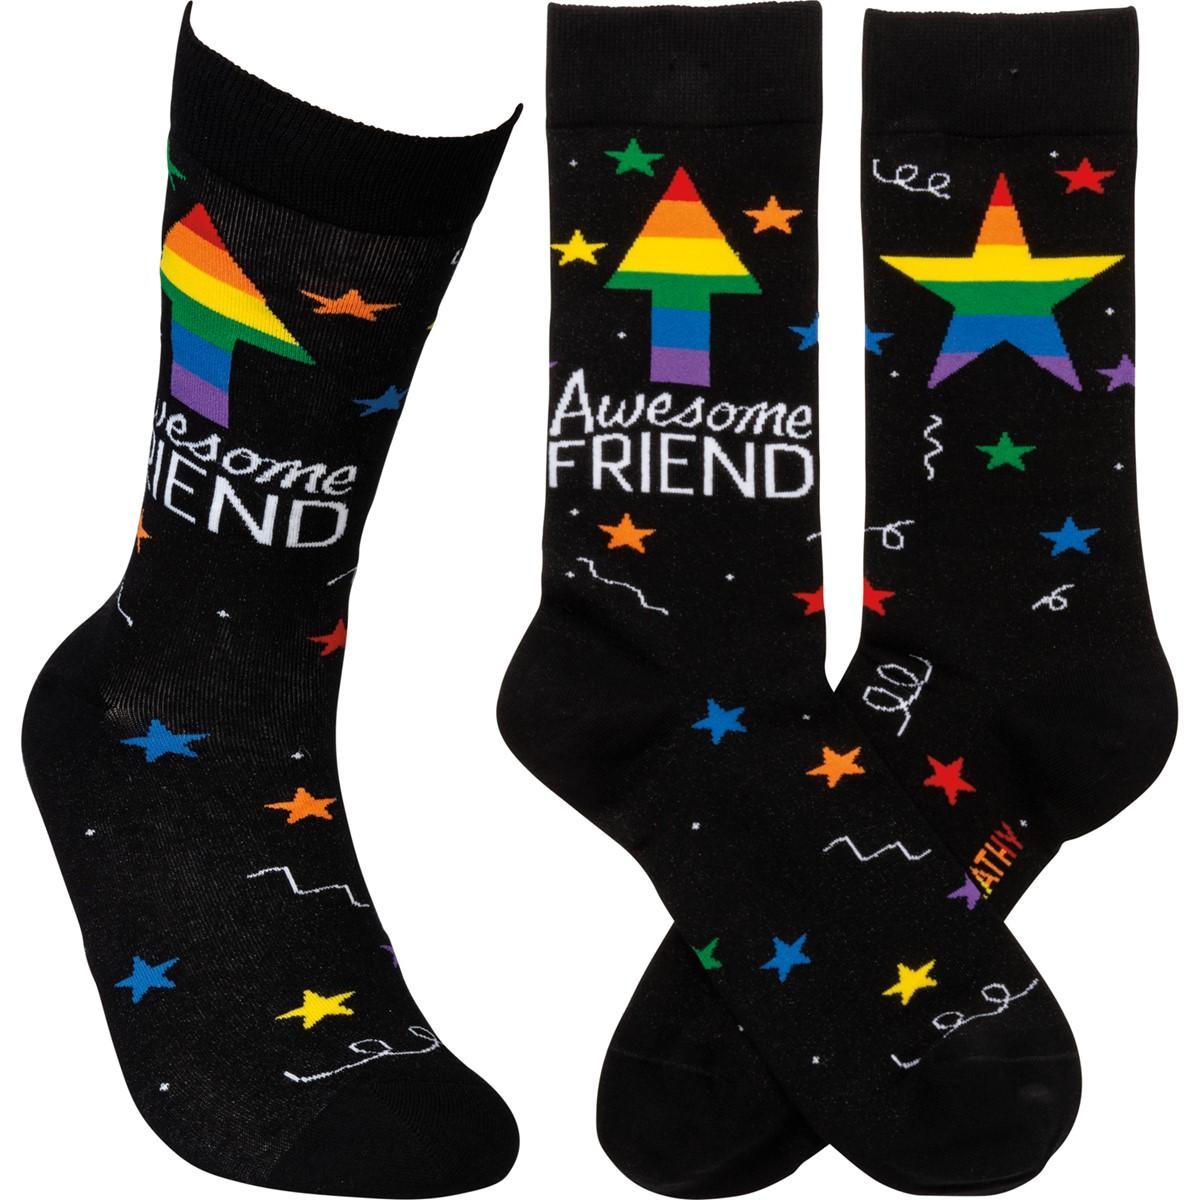 Awesome Friend Star Socks